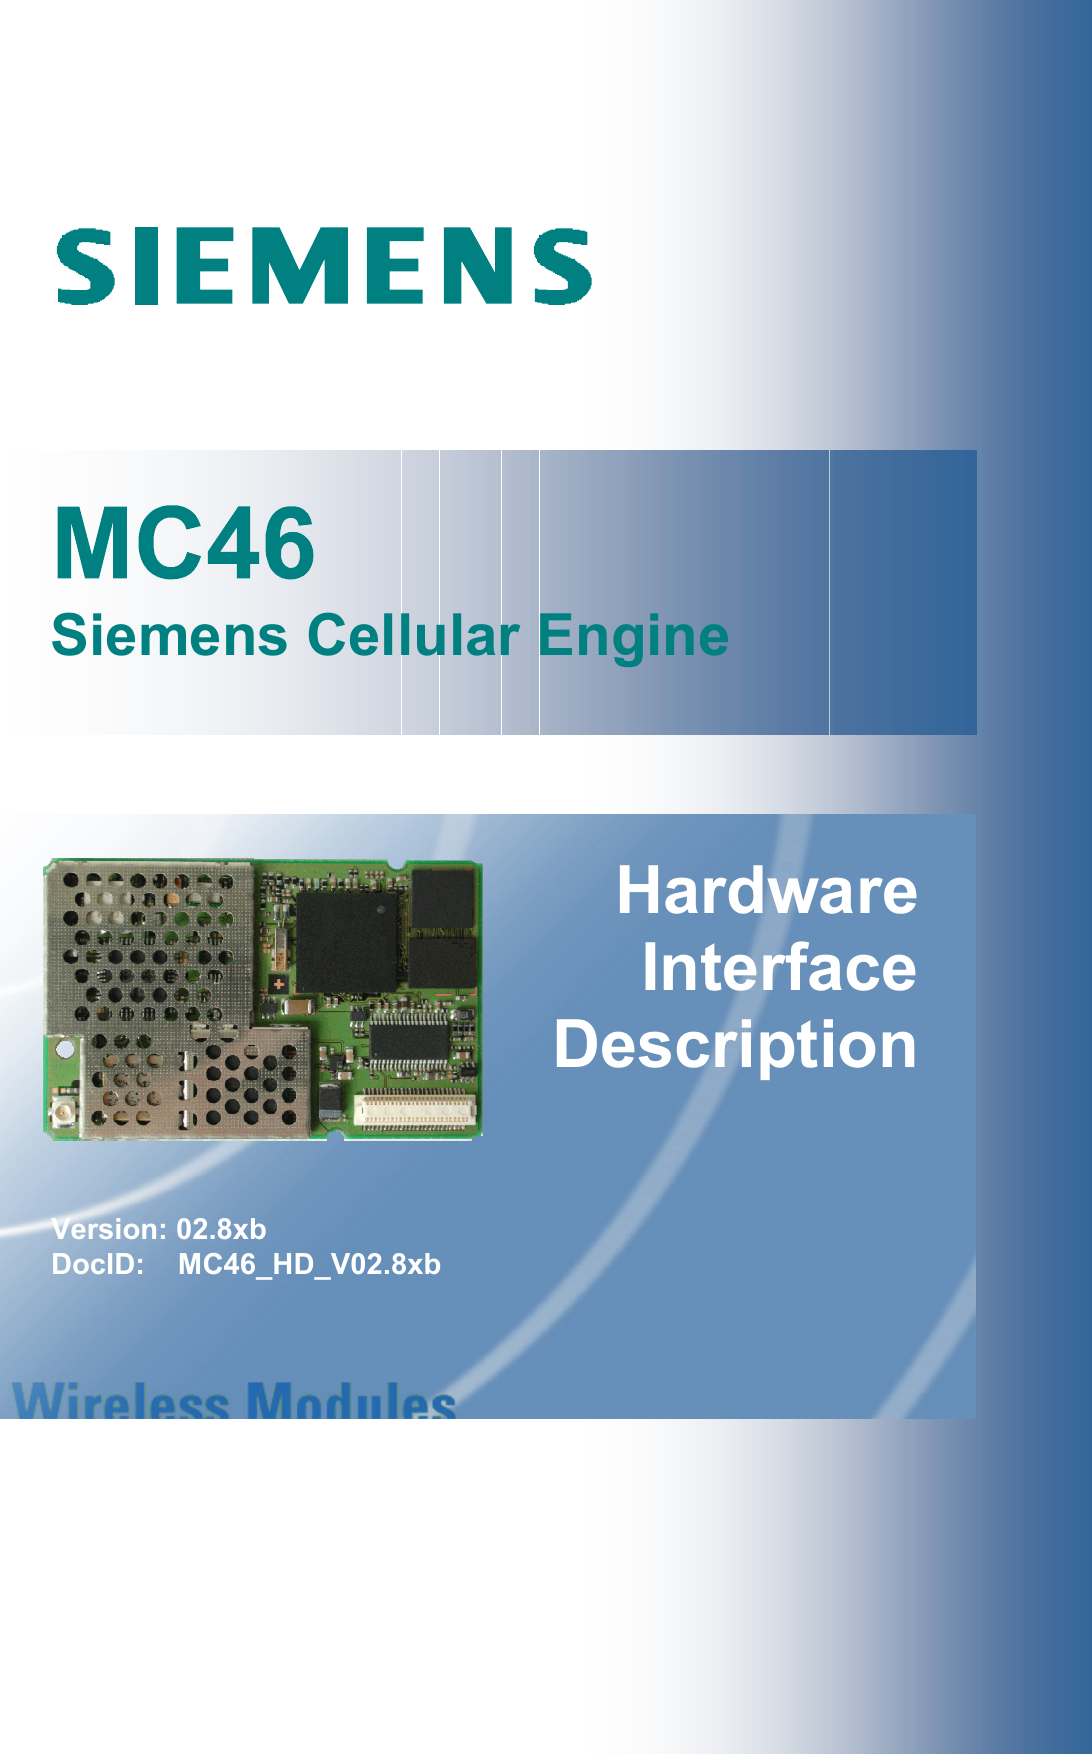                            Siemens Cellular Engine HardwareInterfaceDescription    Version: 02.8xb DocID:    MC46_HD_V02.8xb  